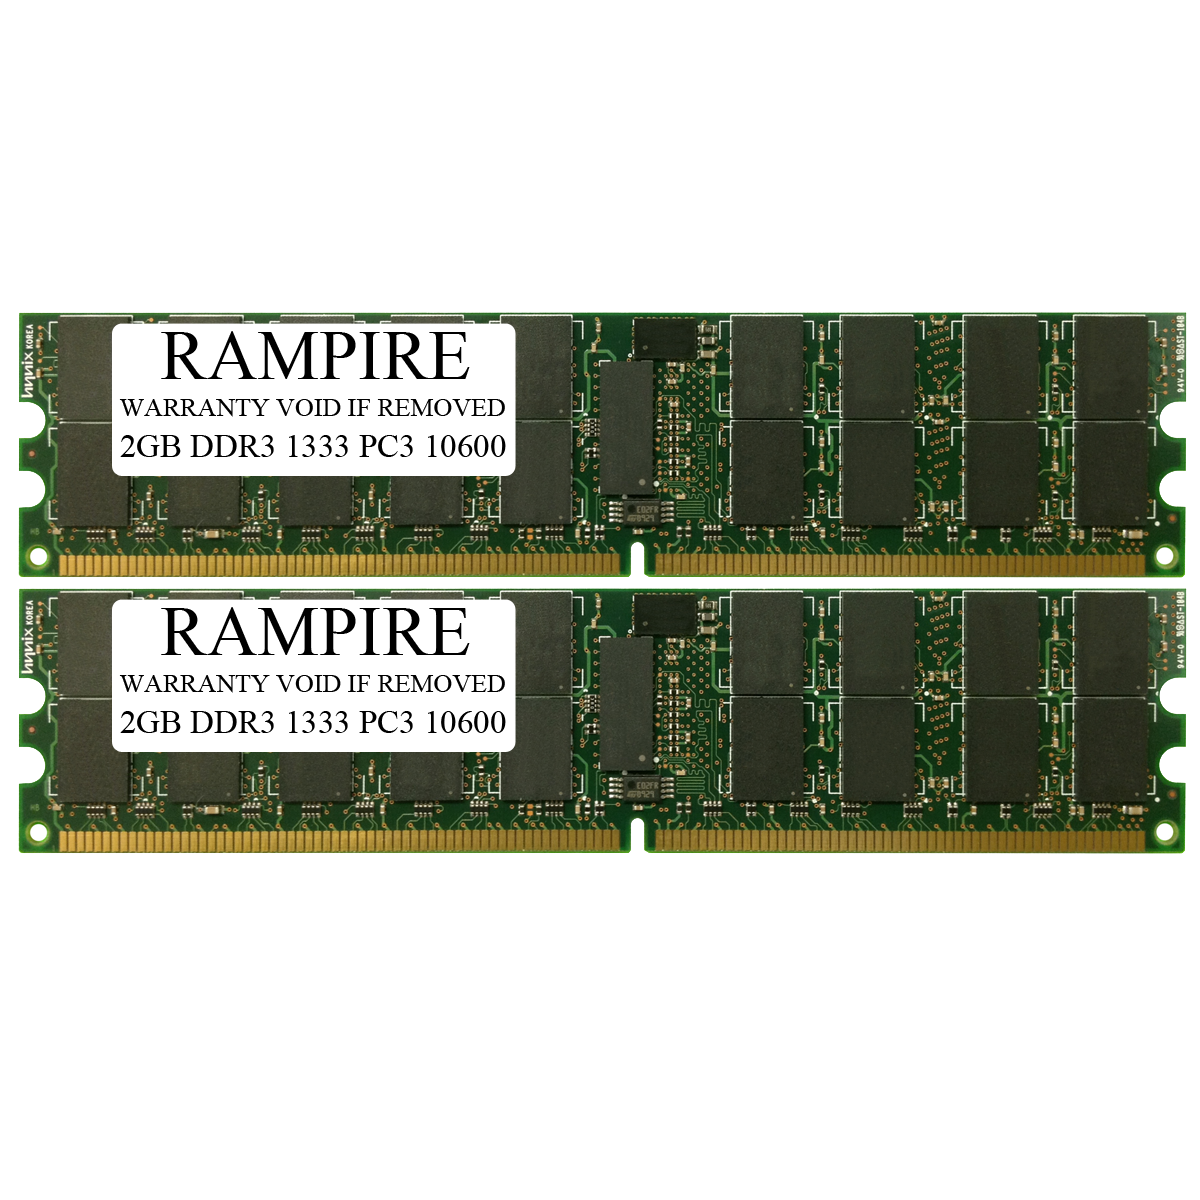 RAMPIRE 4GB (2 x 2GB) DDR3 1333 (PC3 10600) 240-Pin SDRAM 2Rx8 Standard Profile 1.5V ECC Registered Server Memory